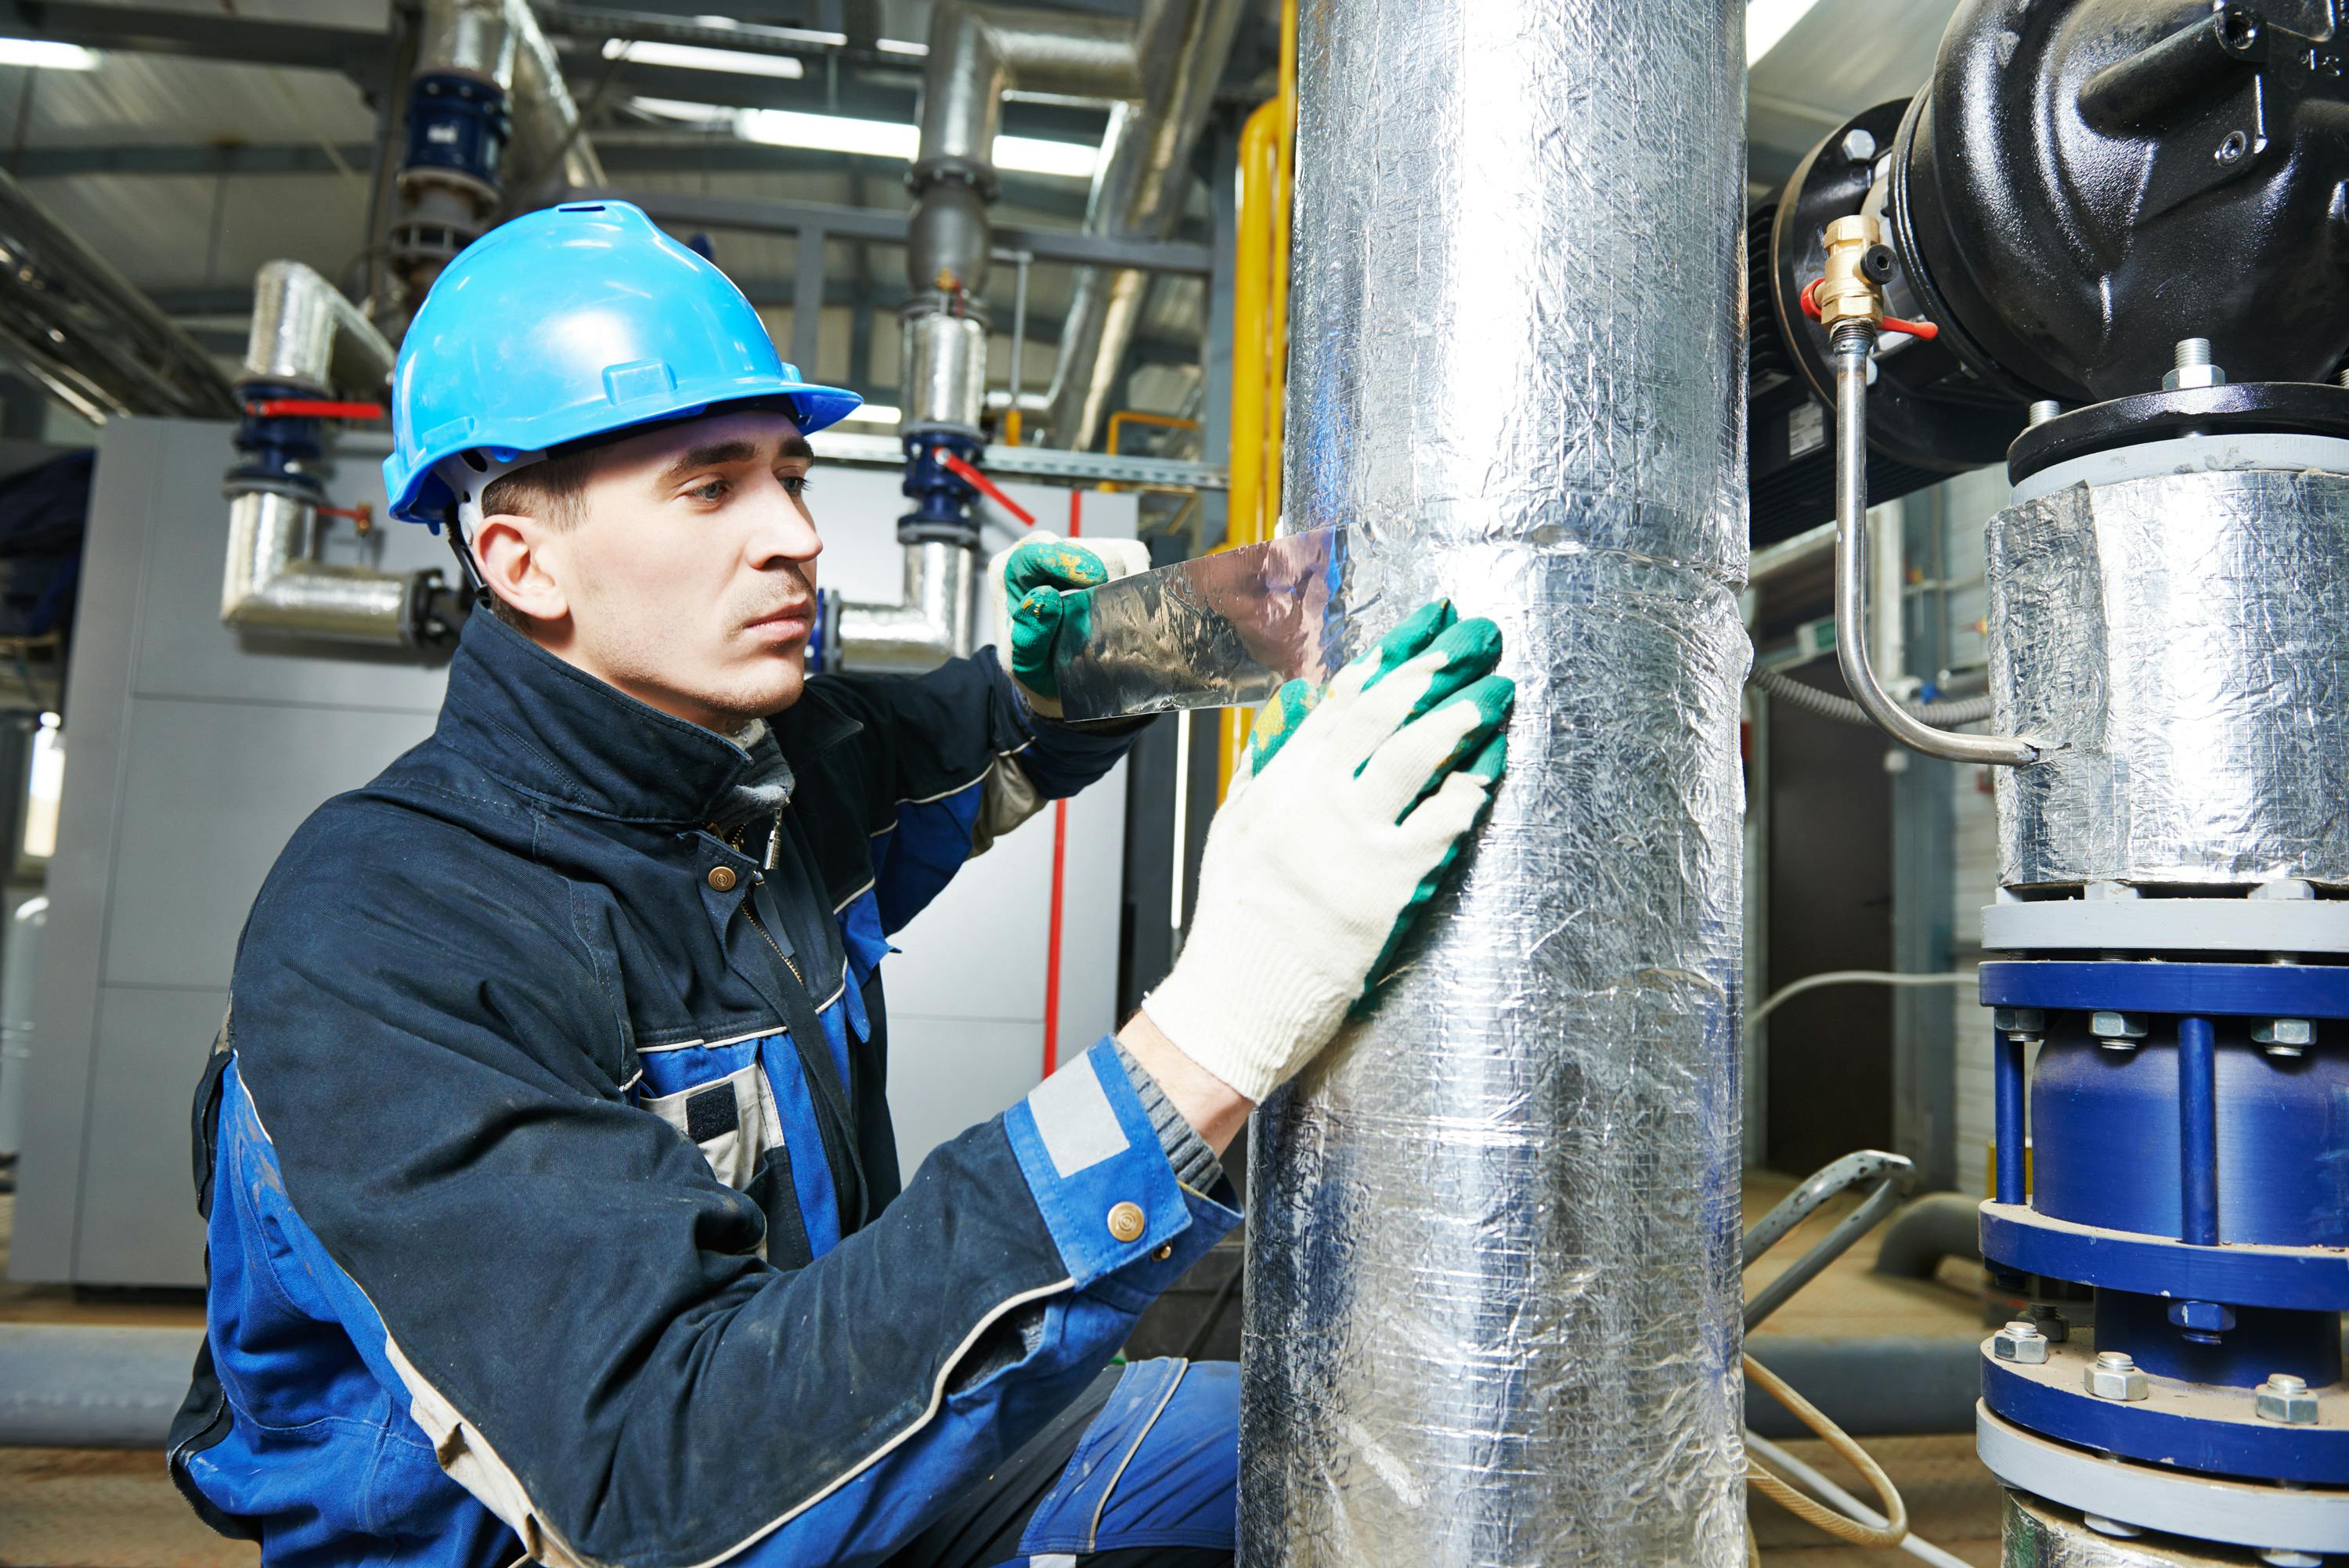 Blue helmet worker applying insulation tape